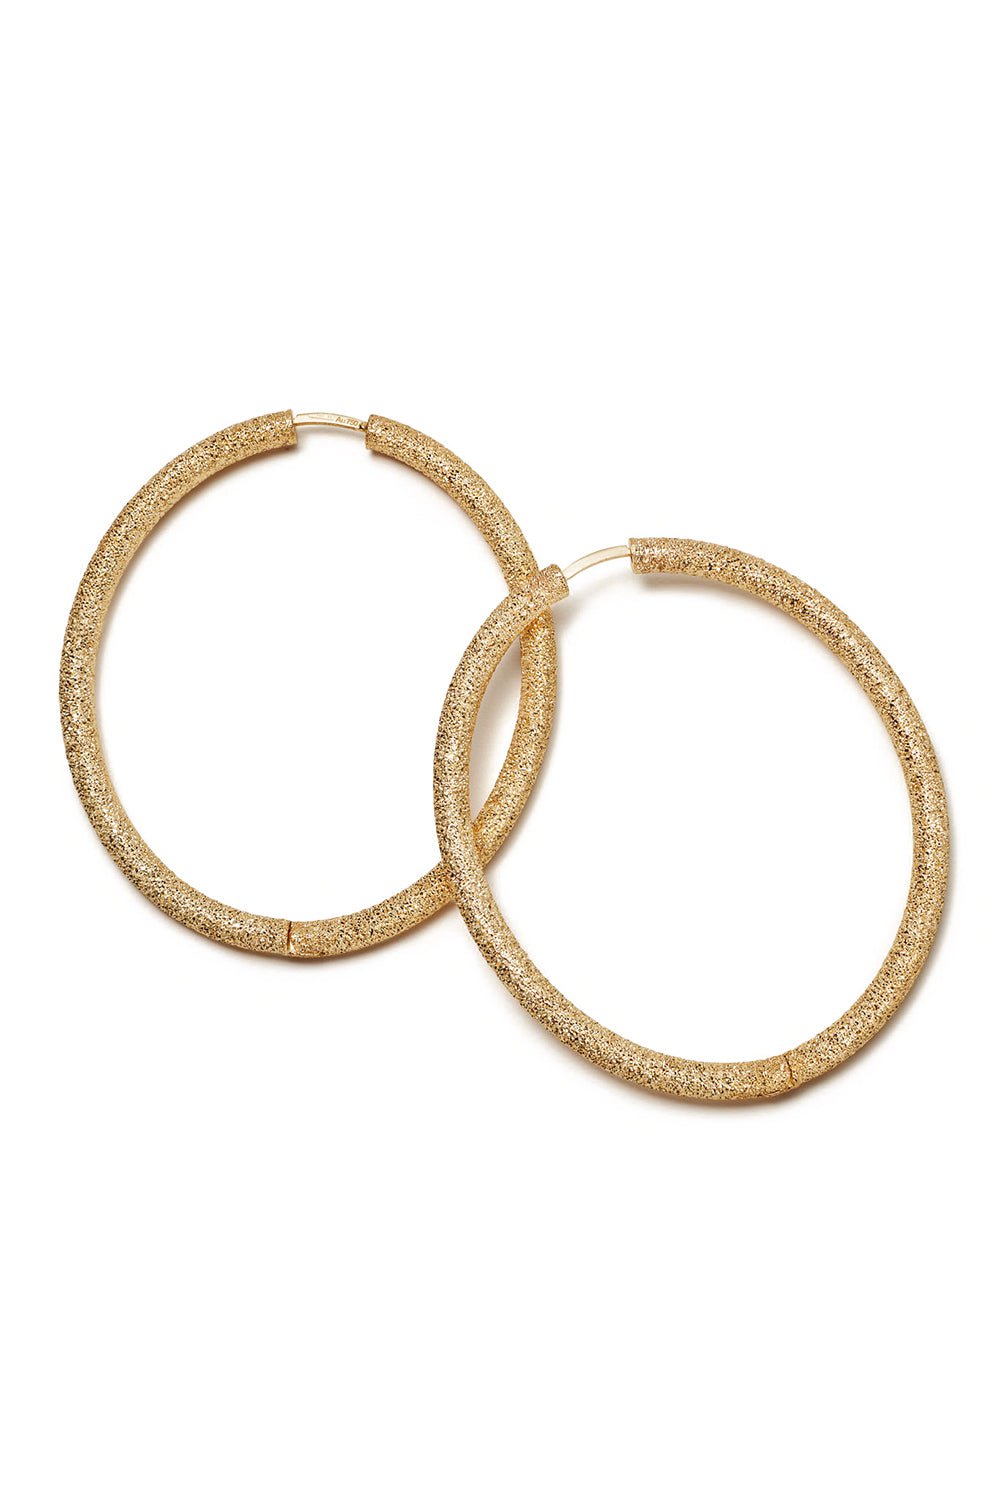 CAROLINA BUCCI-Florentine Finish Extra Large Oval Hoop Earrings-YELLOW GOLD